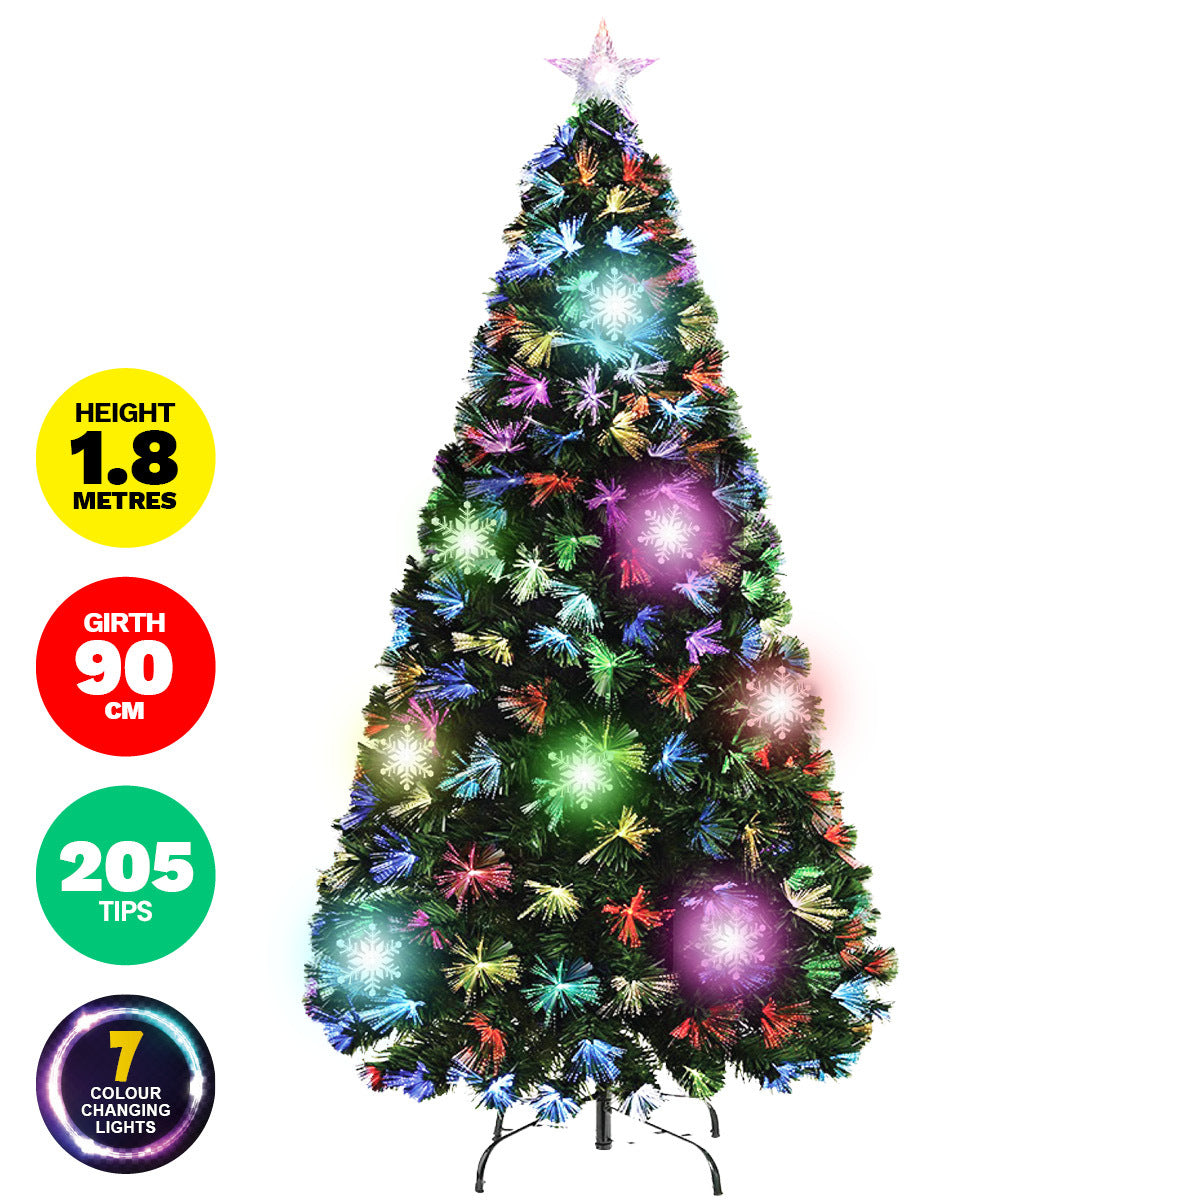 Christmas By Sas 1.8m Fibre Optic/LED Christmas Tree 210 Tips Multicolour Star & Ornaments Deals499